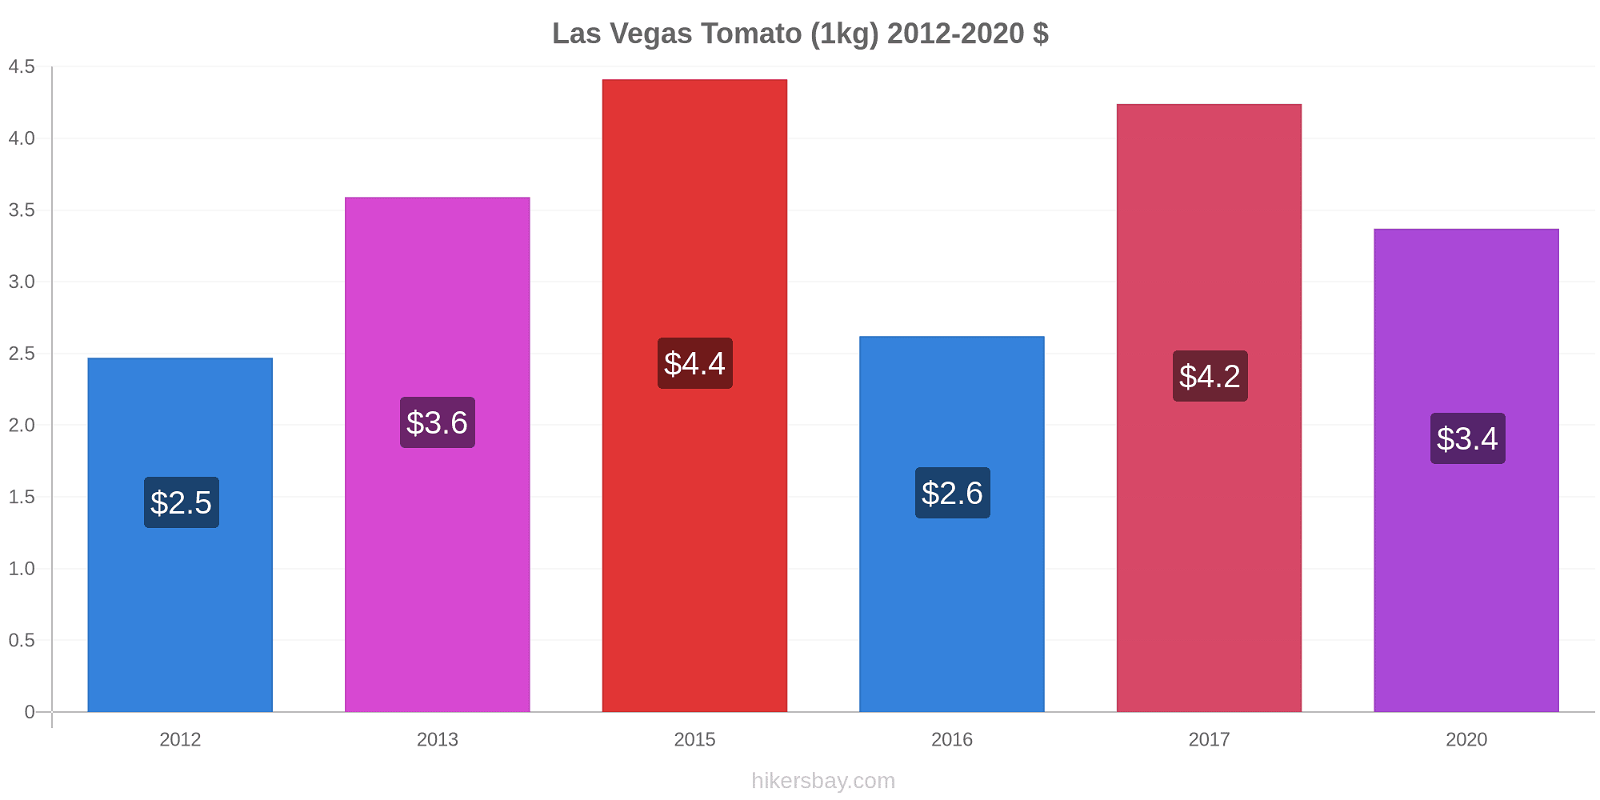 Las Vegas price changes Tomato (1kg) hikersbay.com